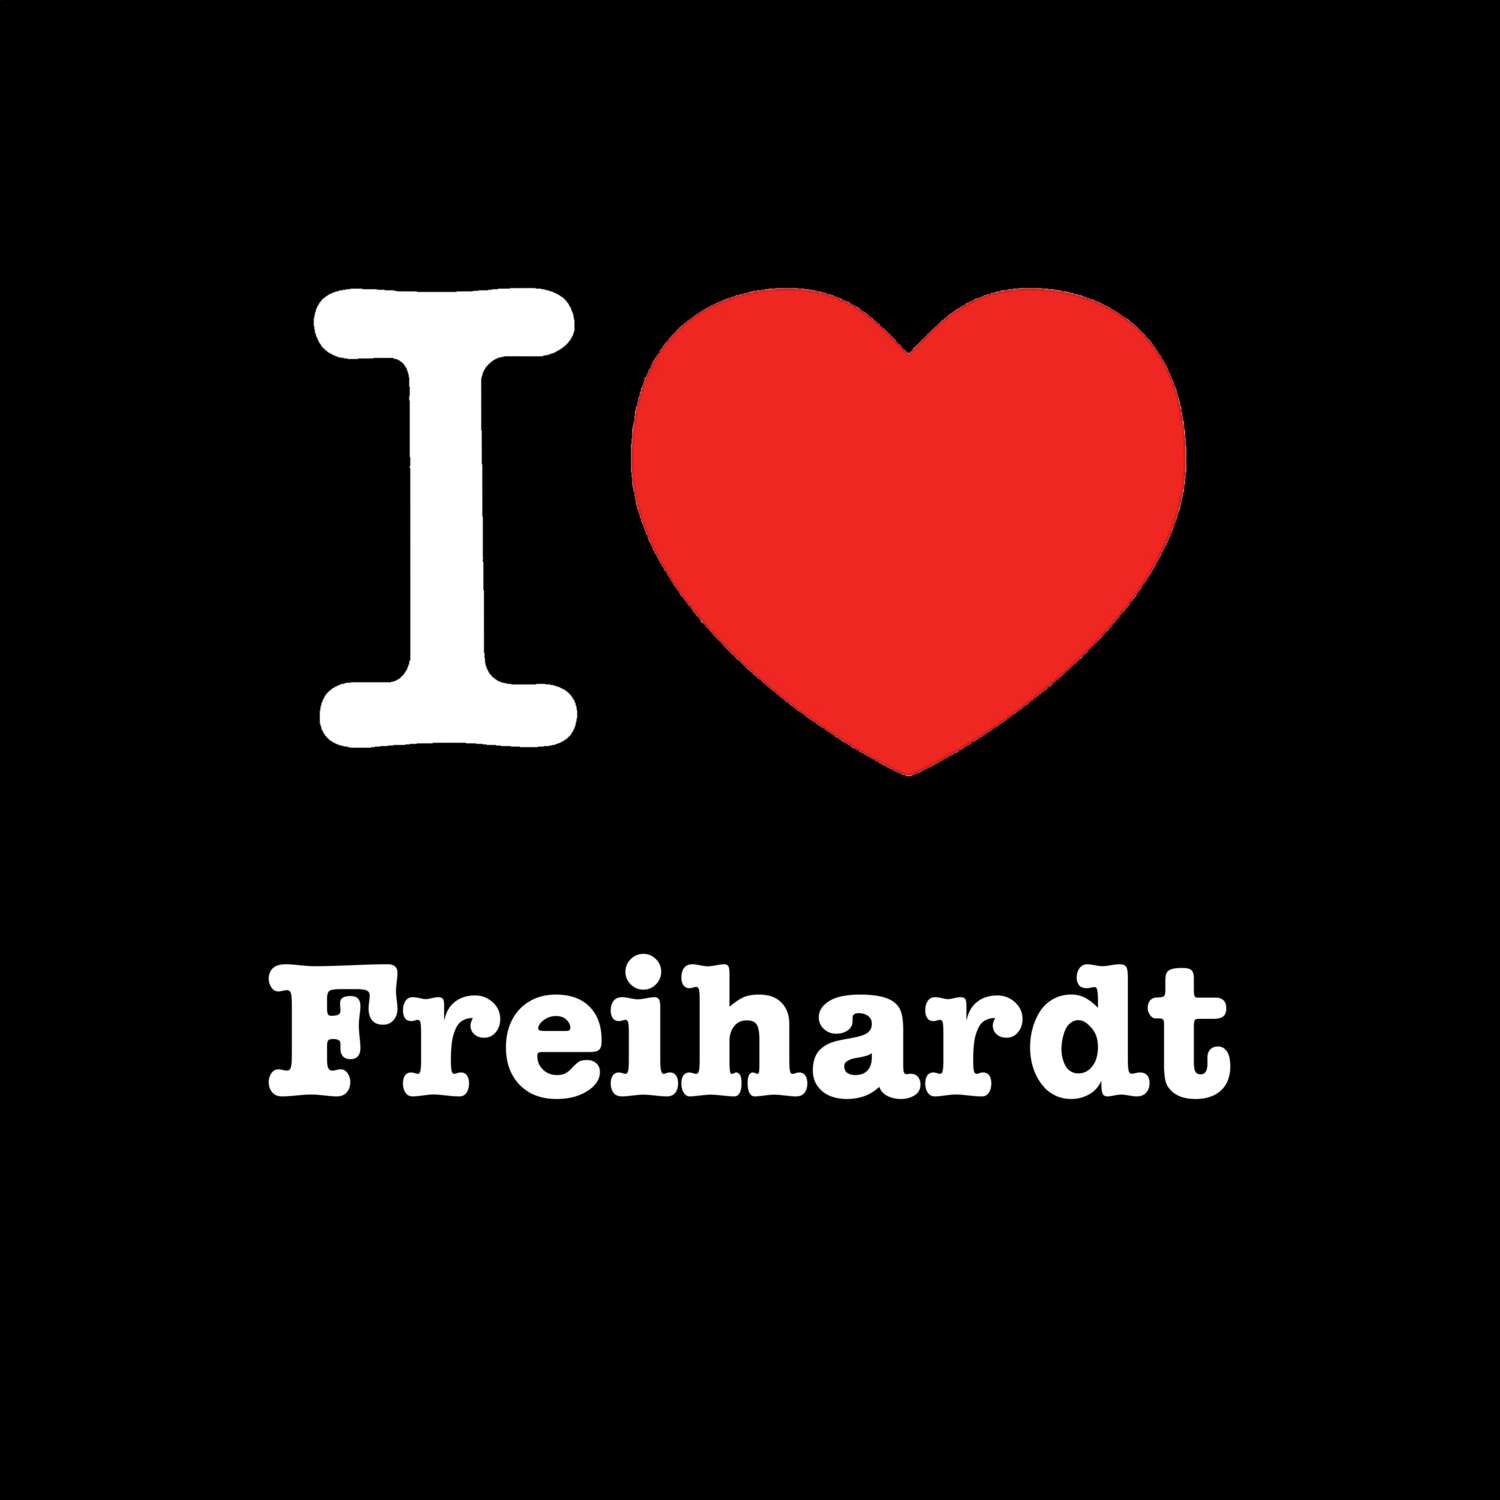 Freihardt T-Shirt »I love«